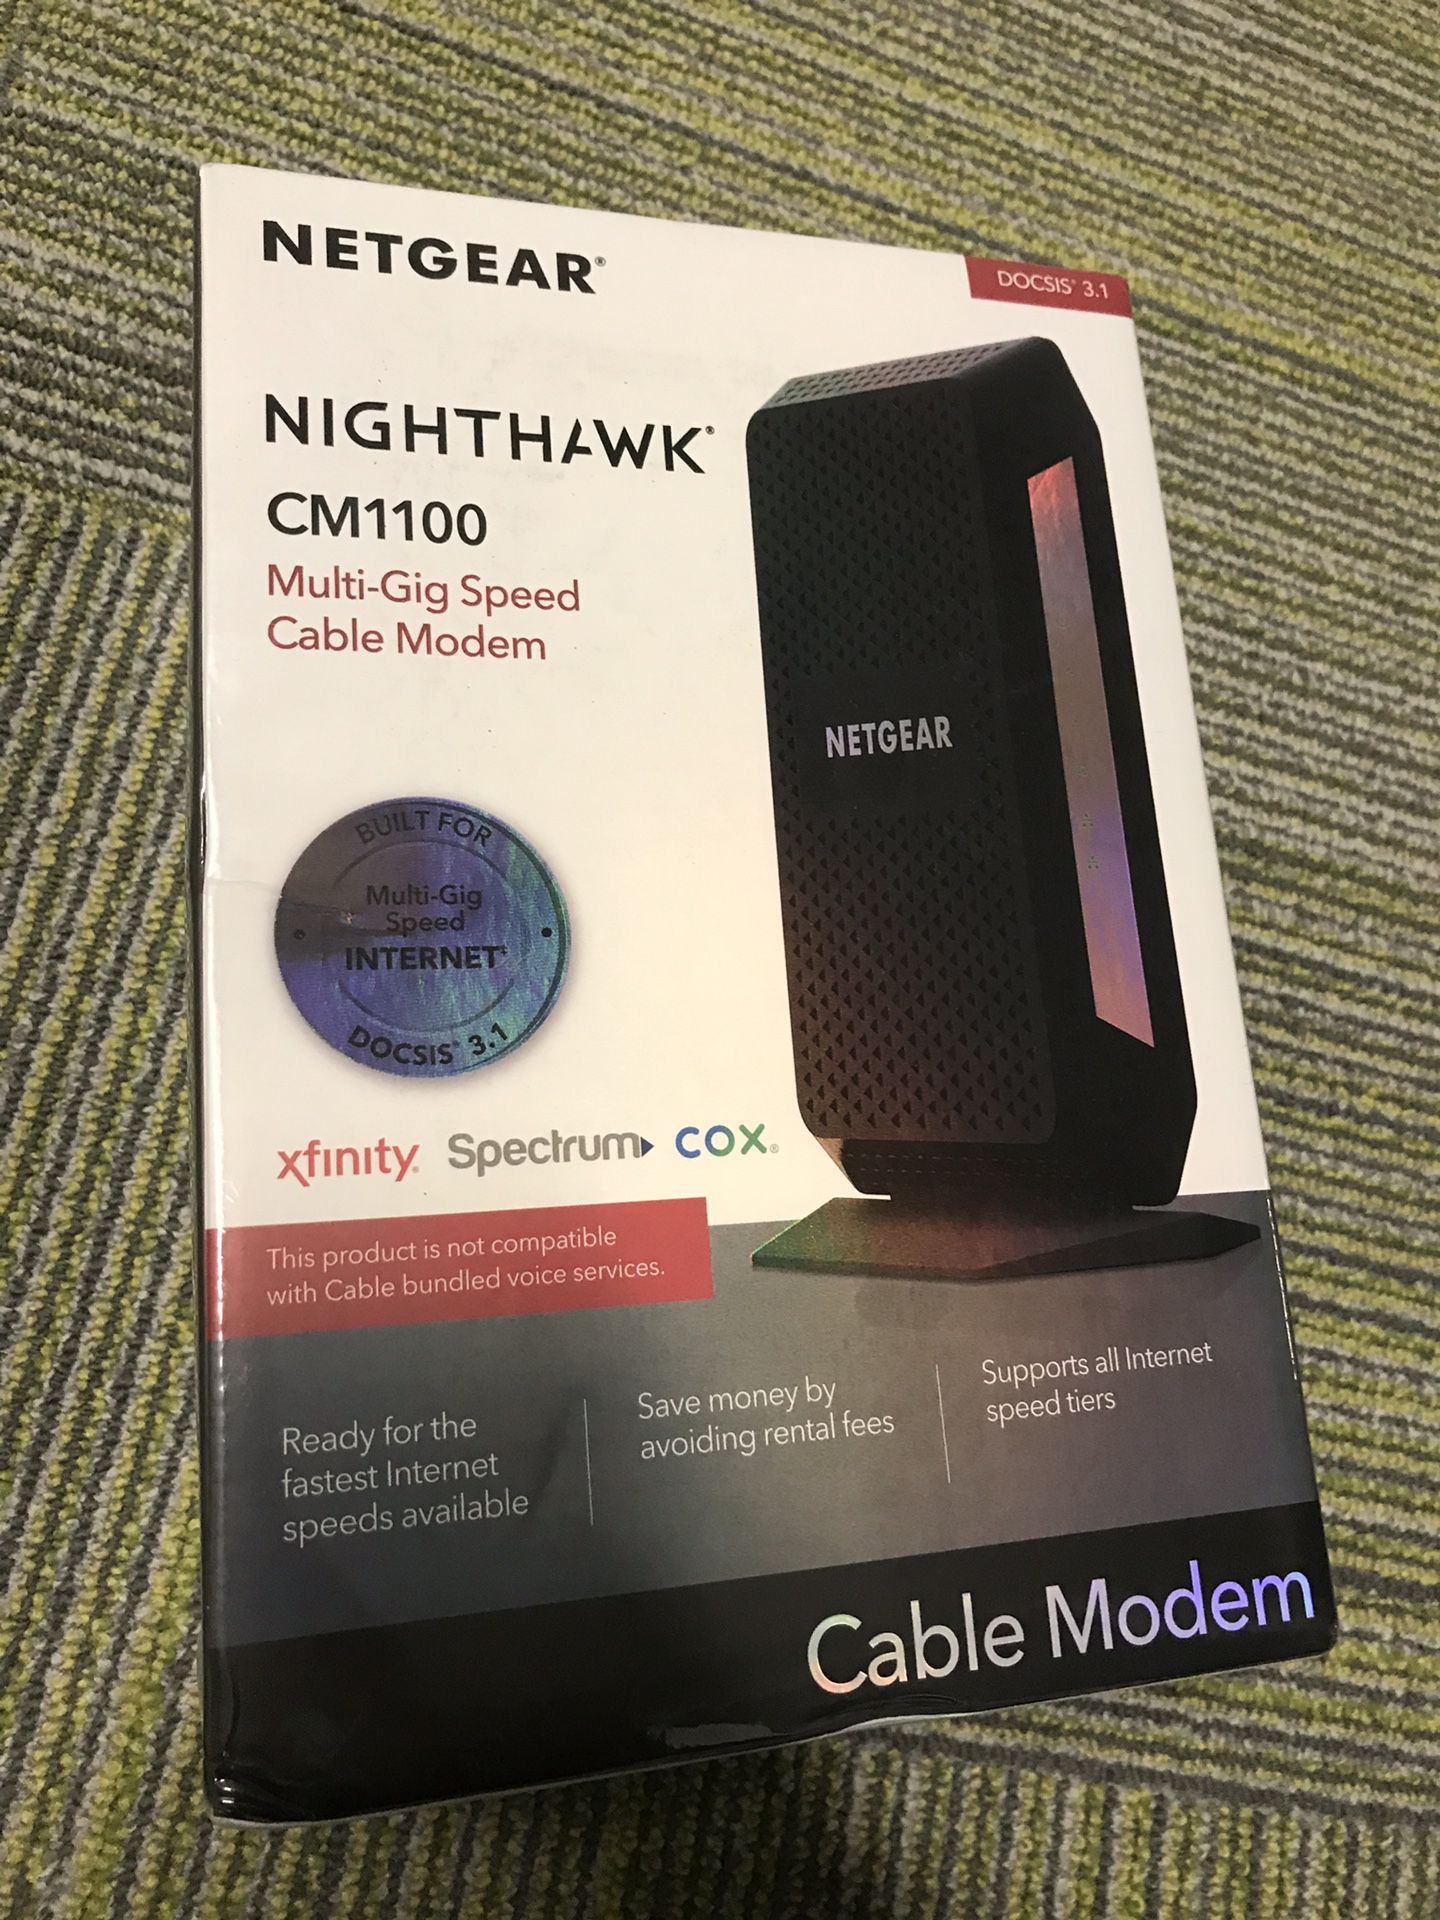 NightHawk CM1100 Netgear Cable Modem